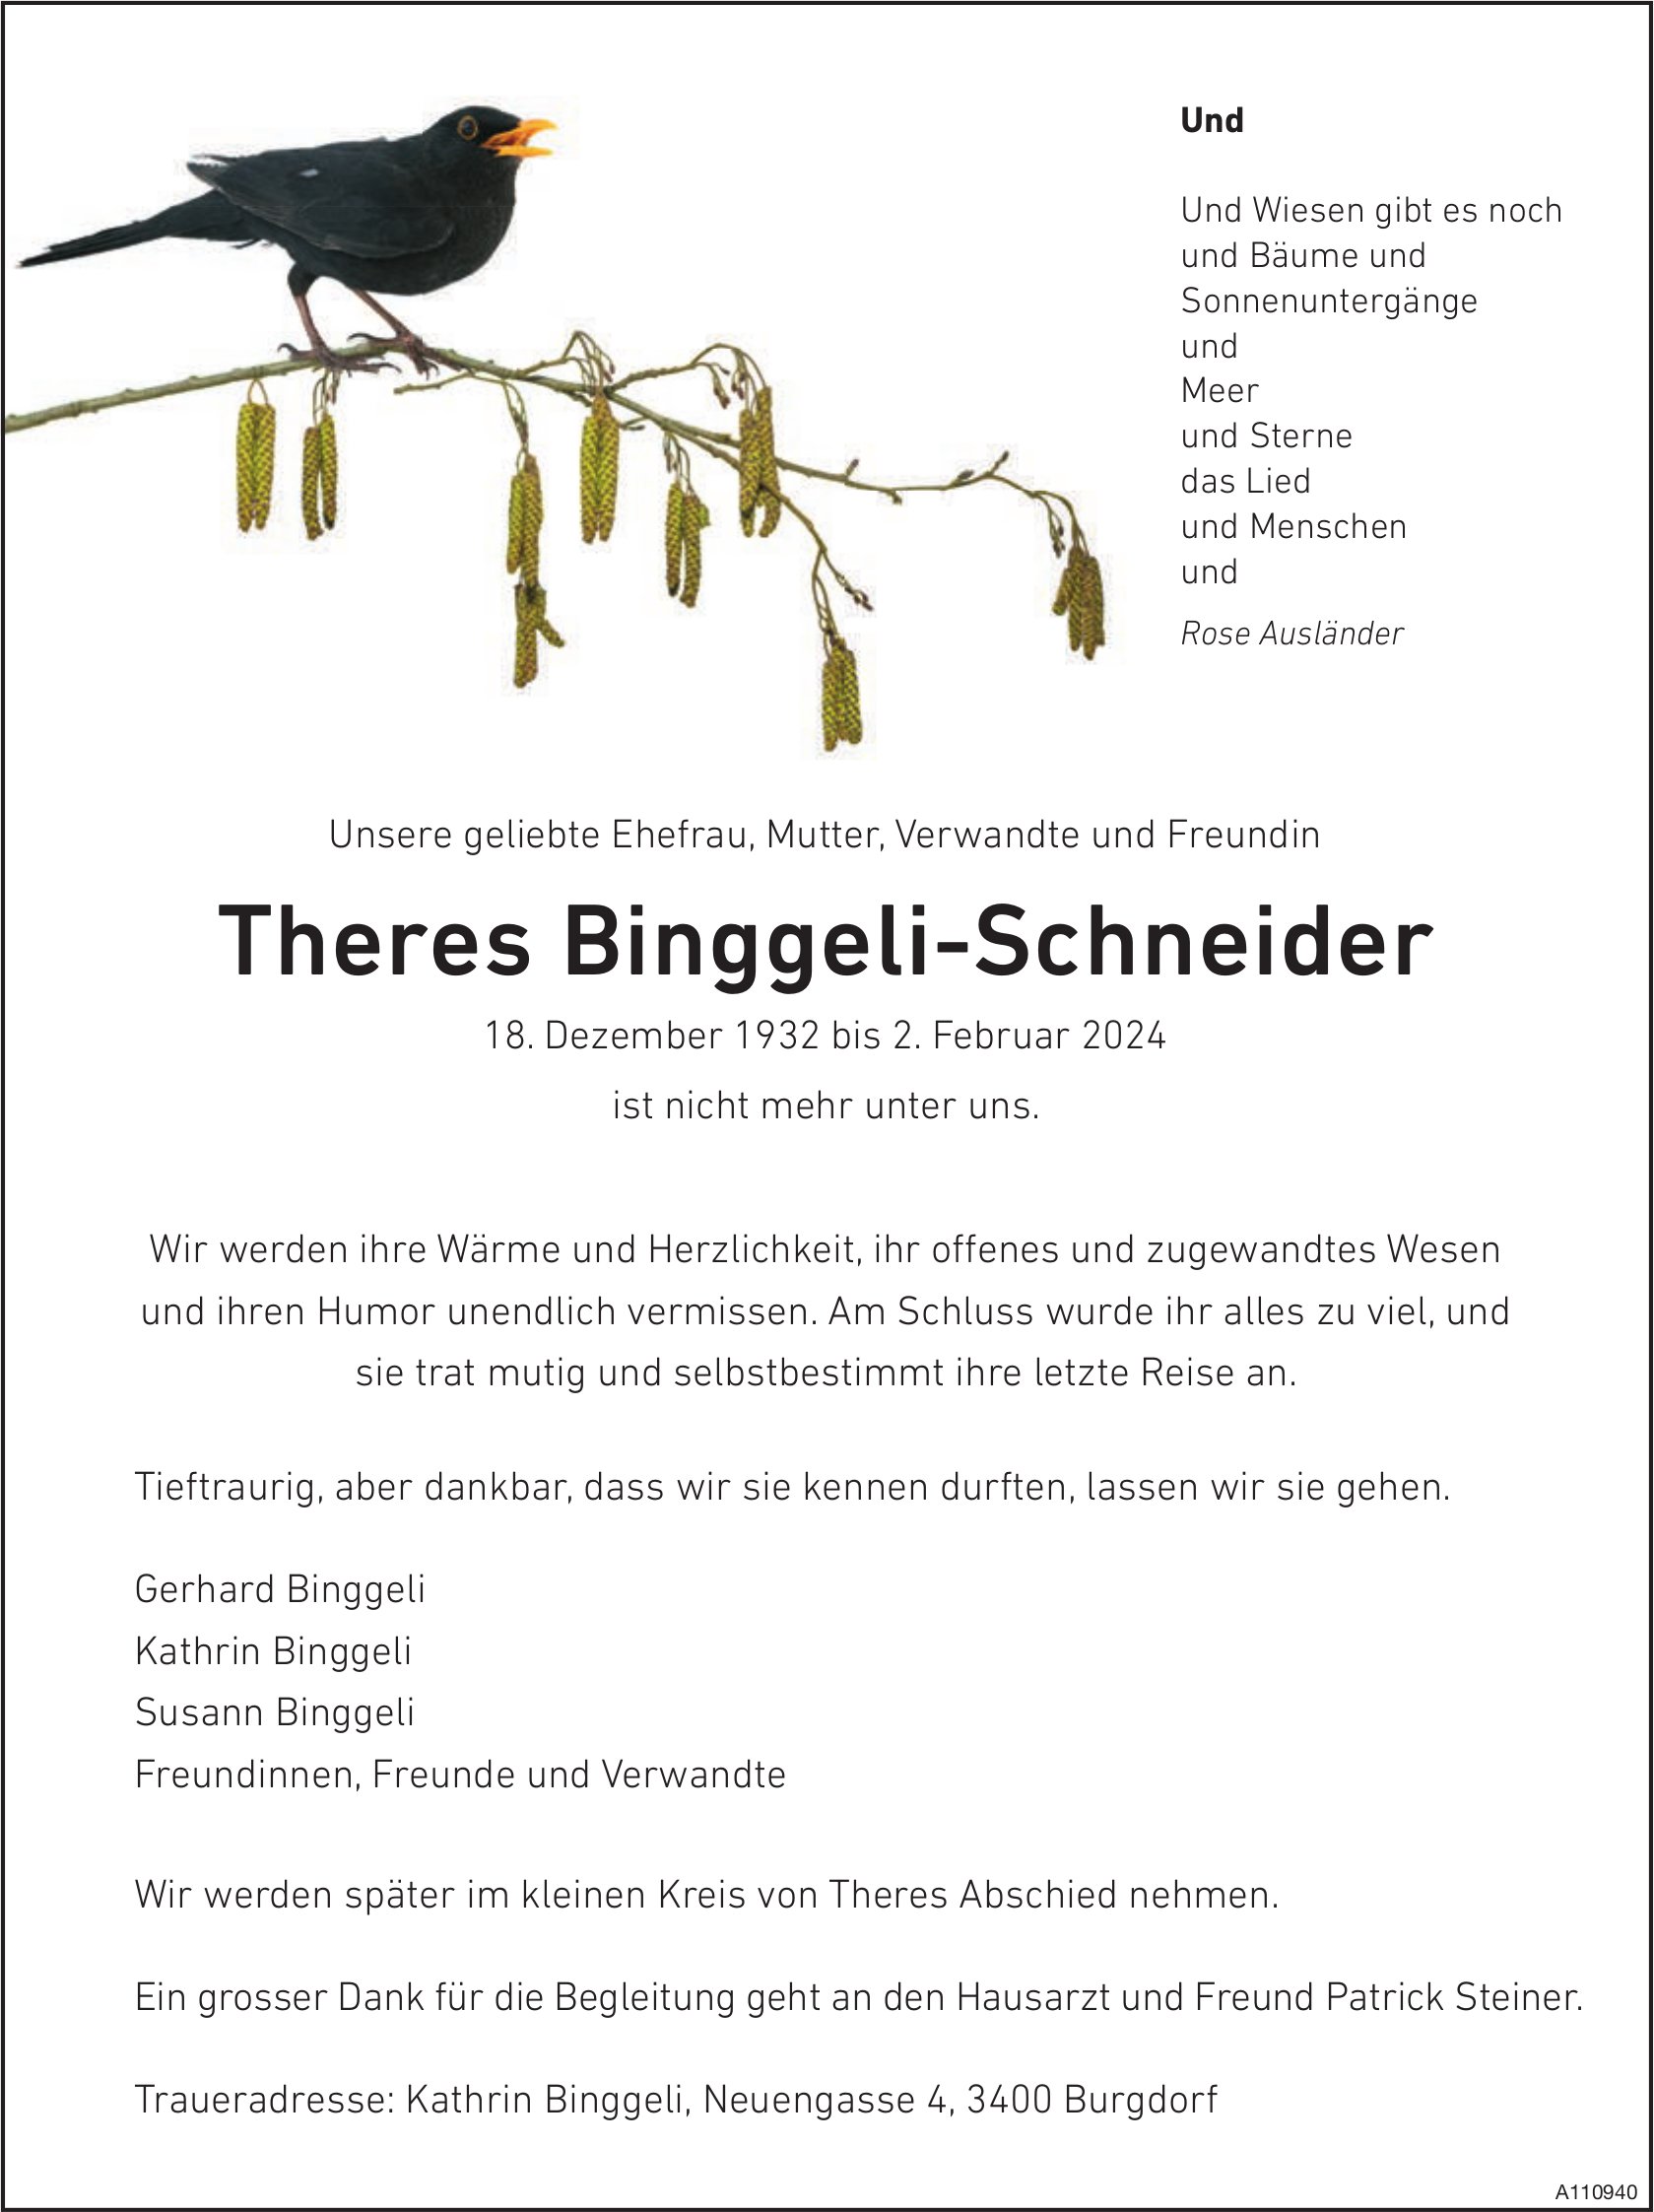 Theres Binggeli-Schneider, Februar 2024 / TA